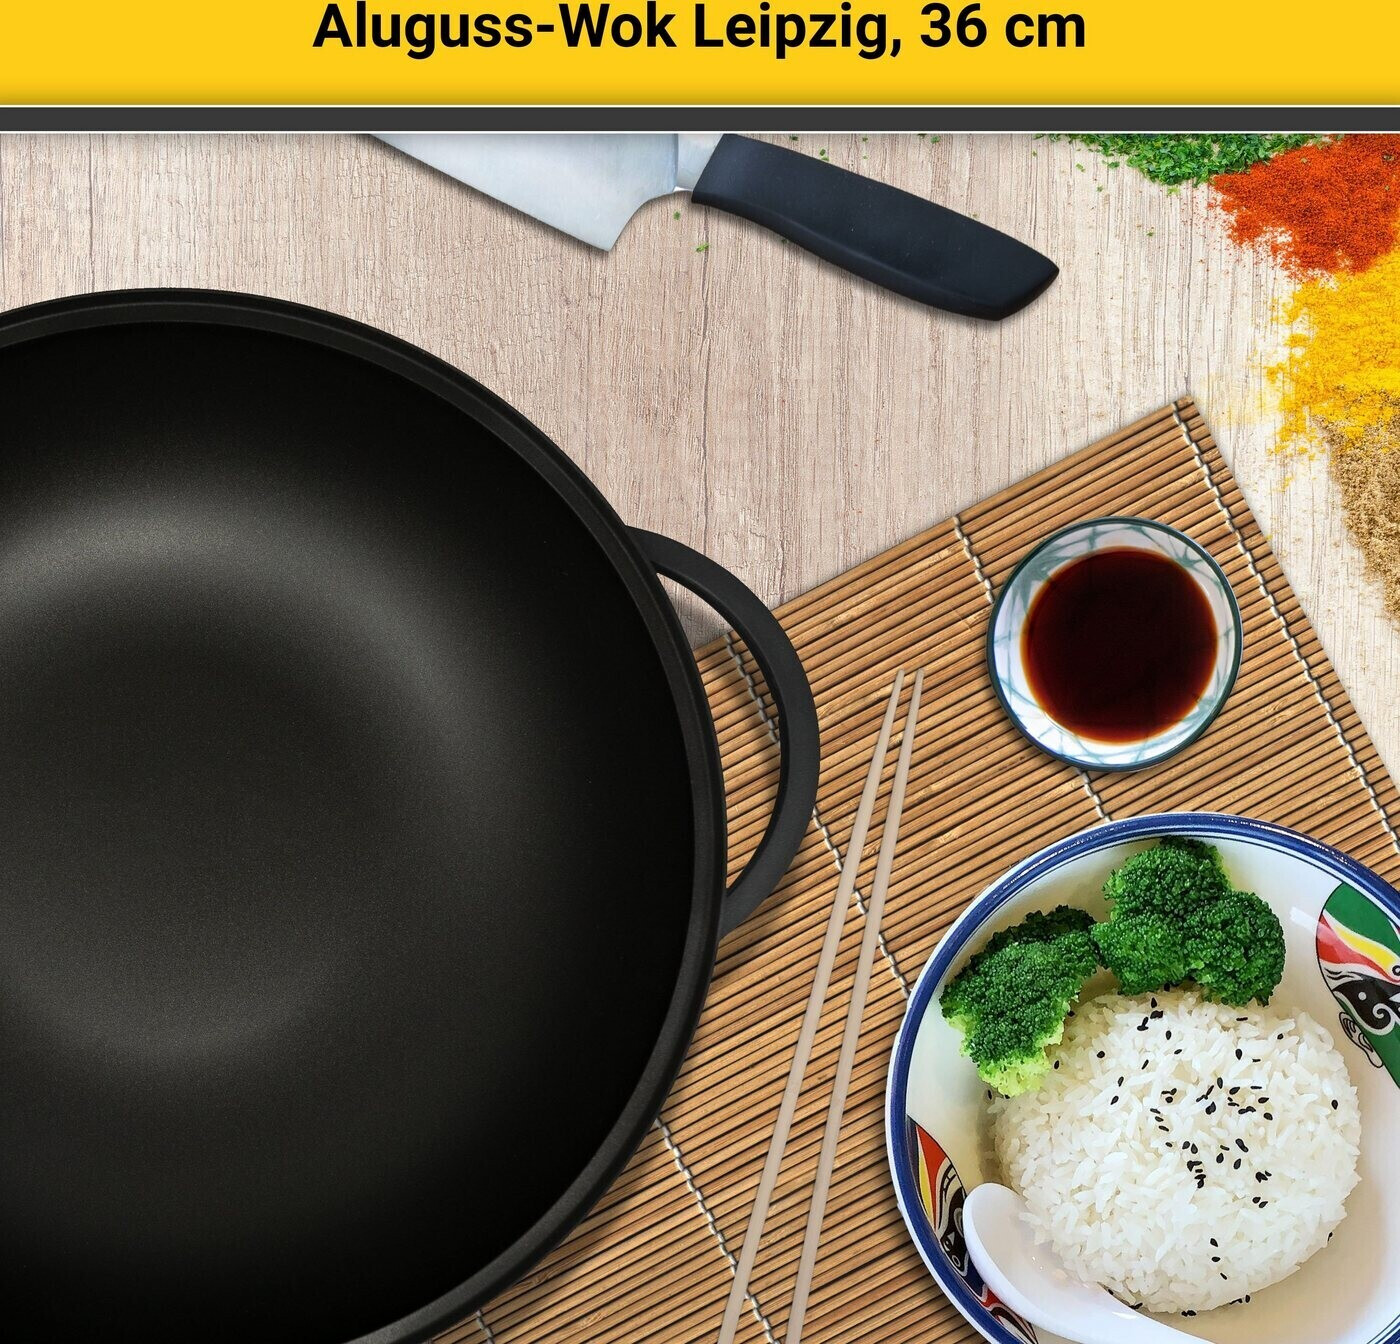 Krüger Leipzig Aluguss-Wok 36 cm ab 45,00 € | Preisvergleich bei